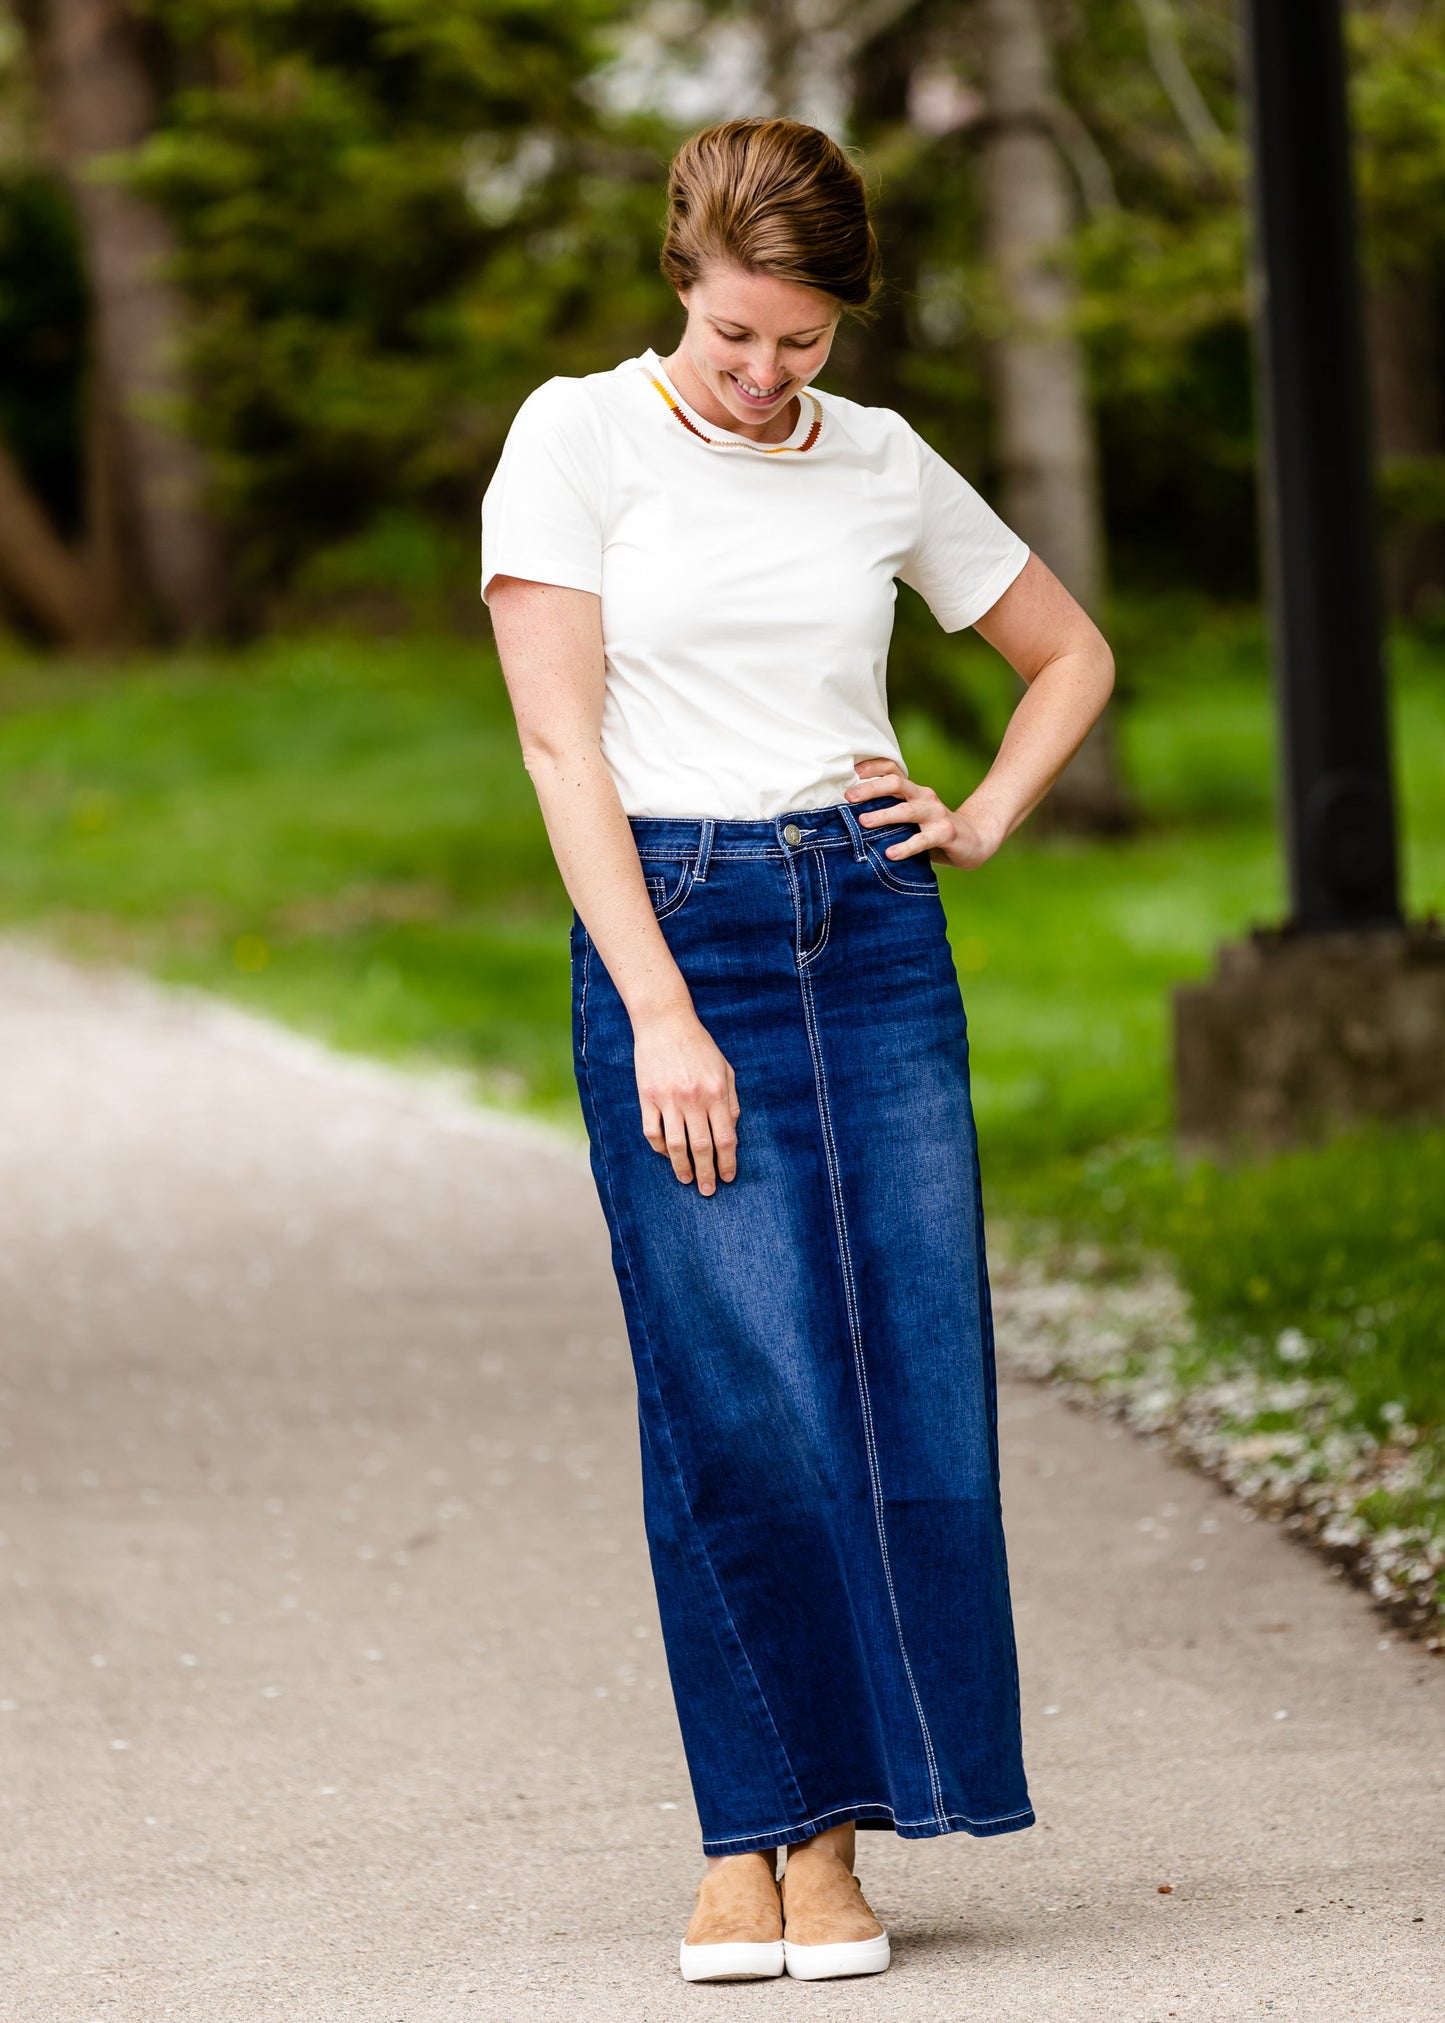 Natalie Dark Denim Long Jean Skirt - FINAL SALE Skirts